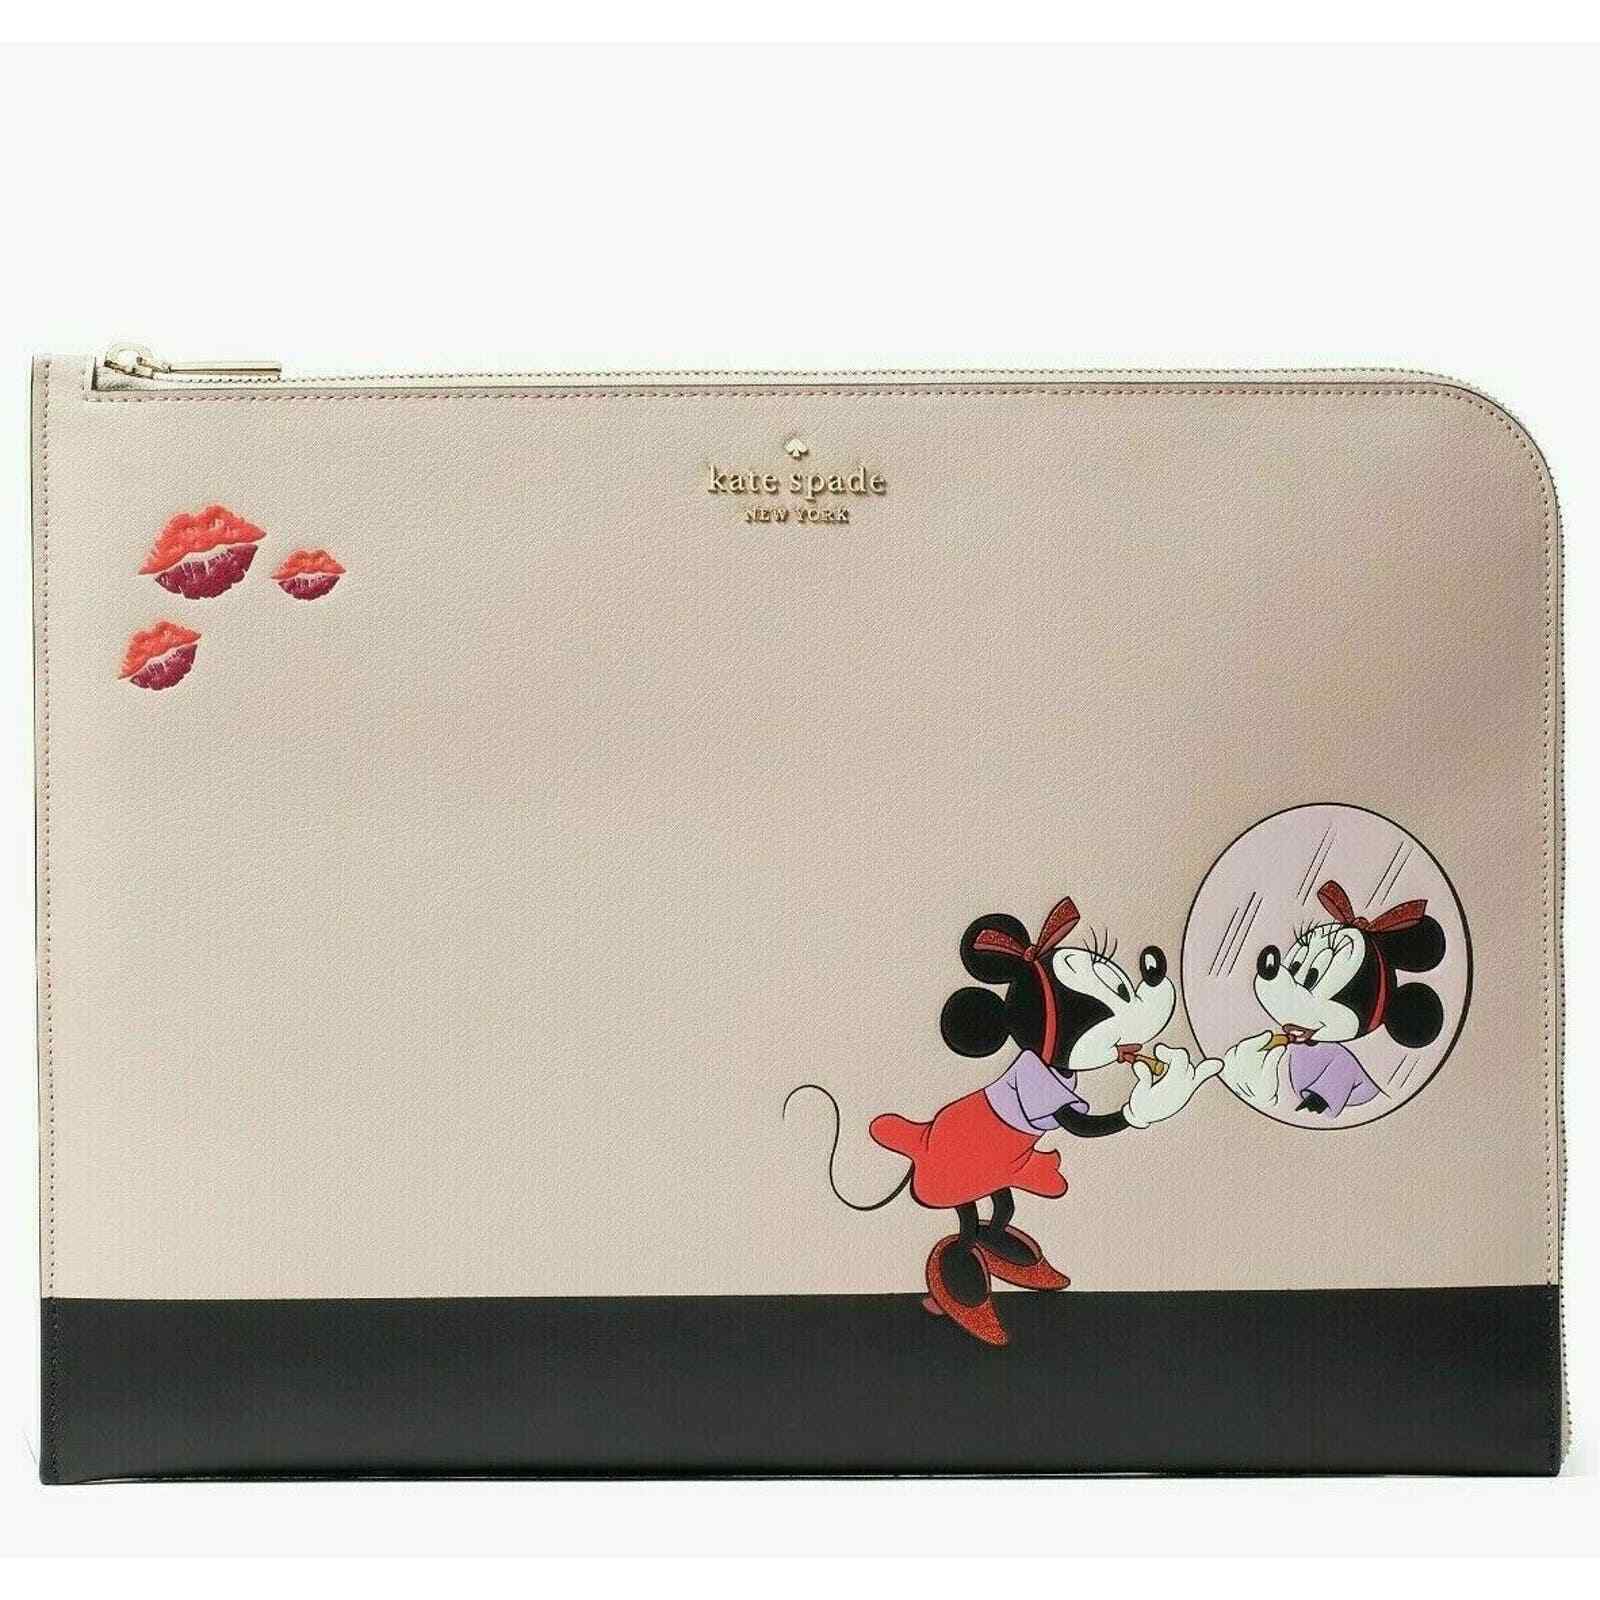 Kate Spade Disney X Kate Spade Minnie Universal Laptop Sleeve Limited Edition